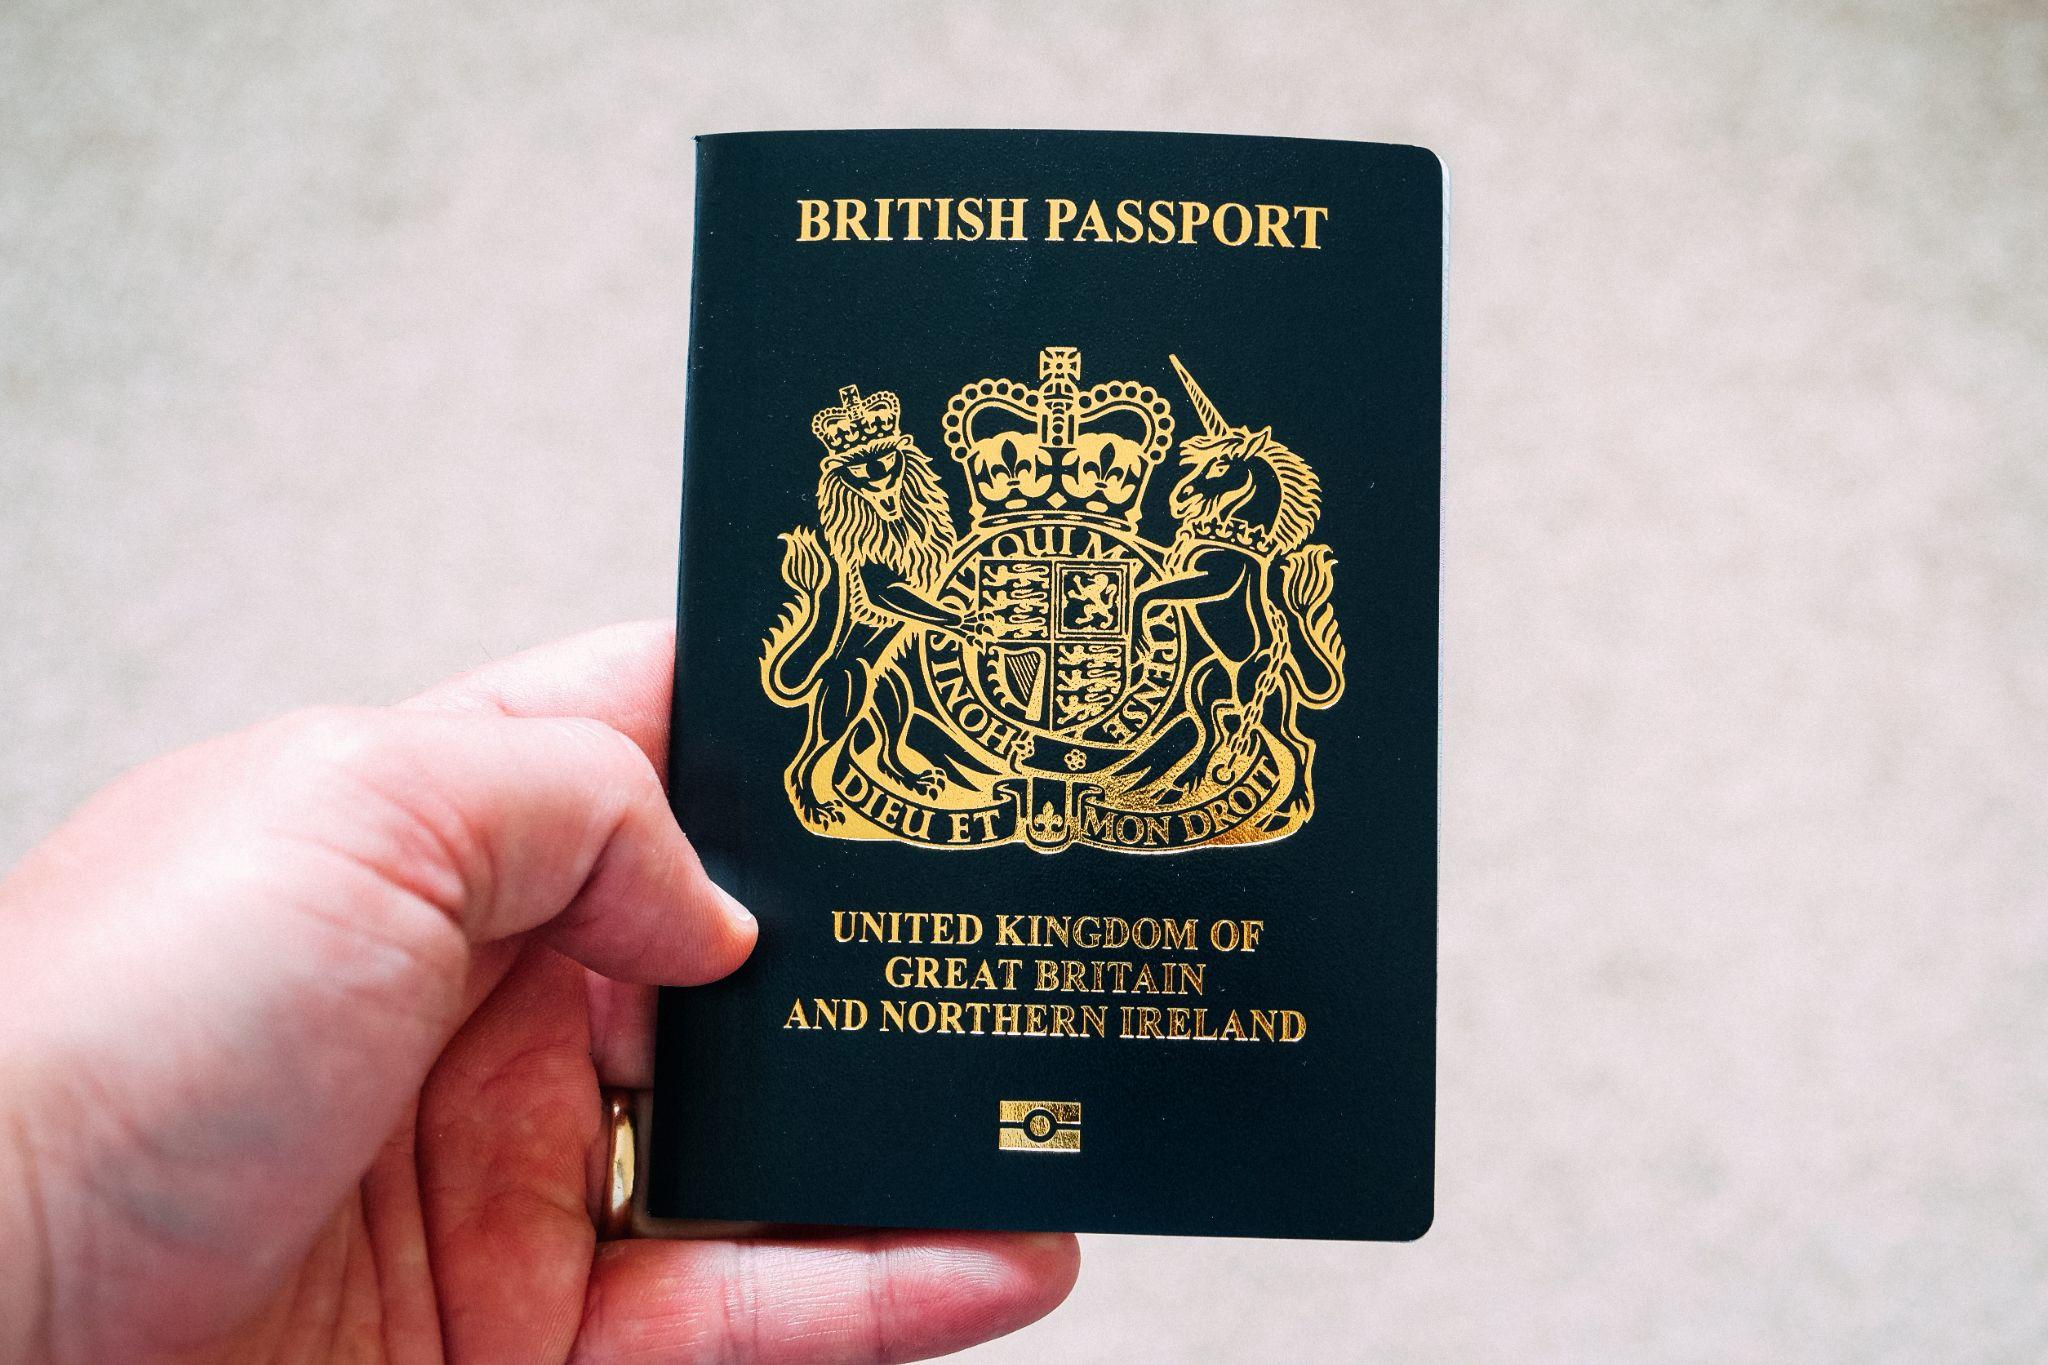 US Citizen with UK passport